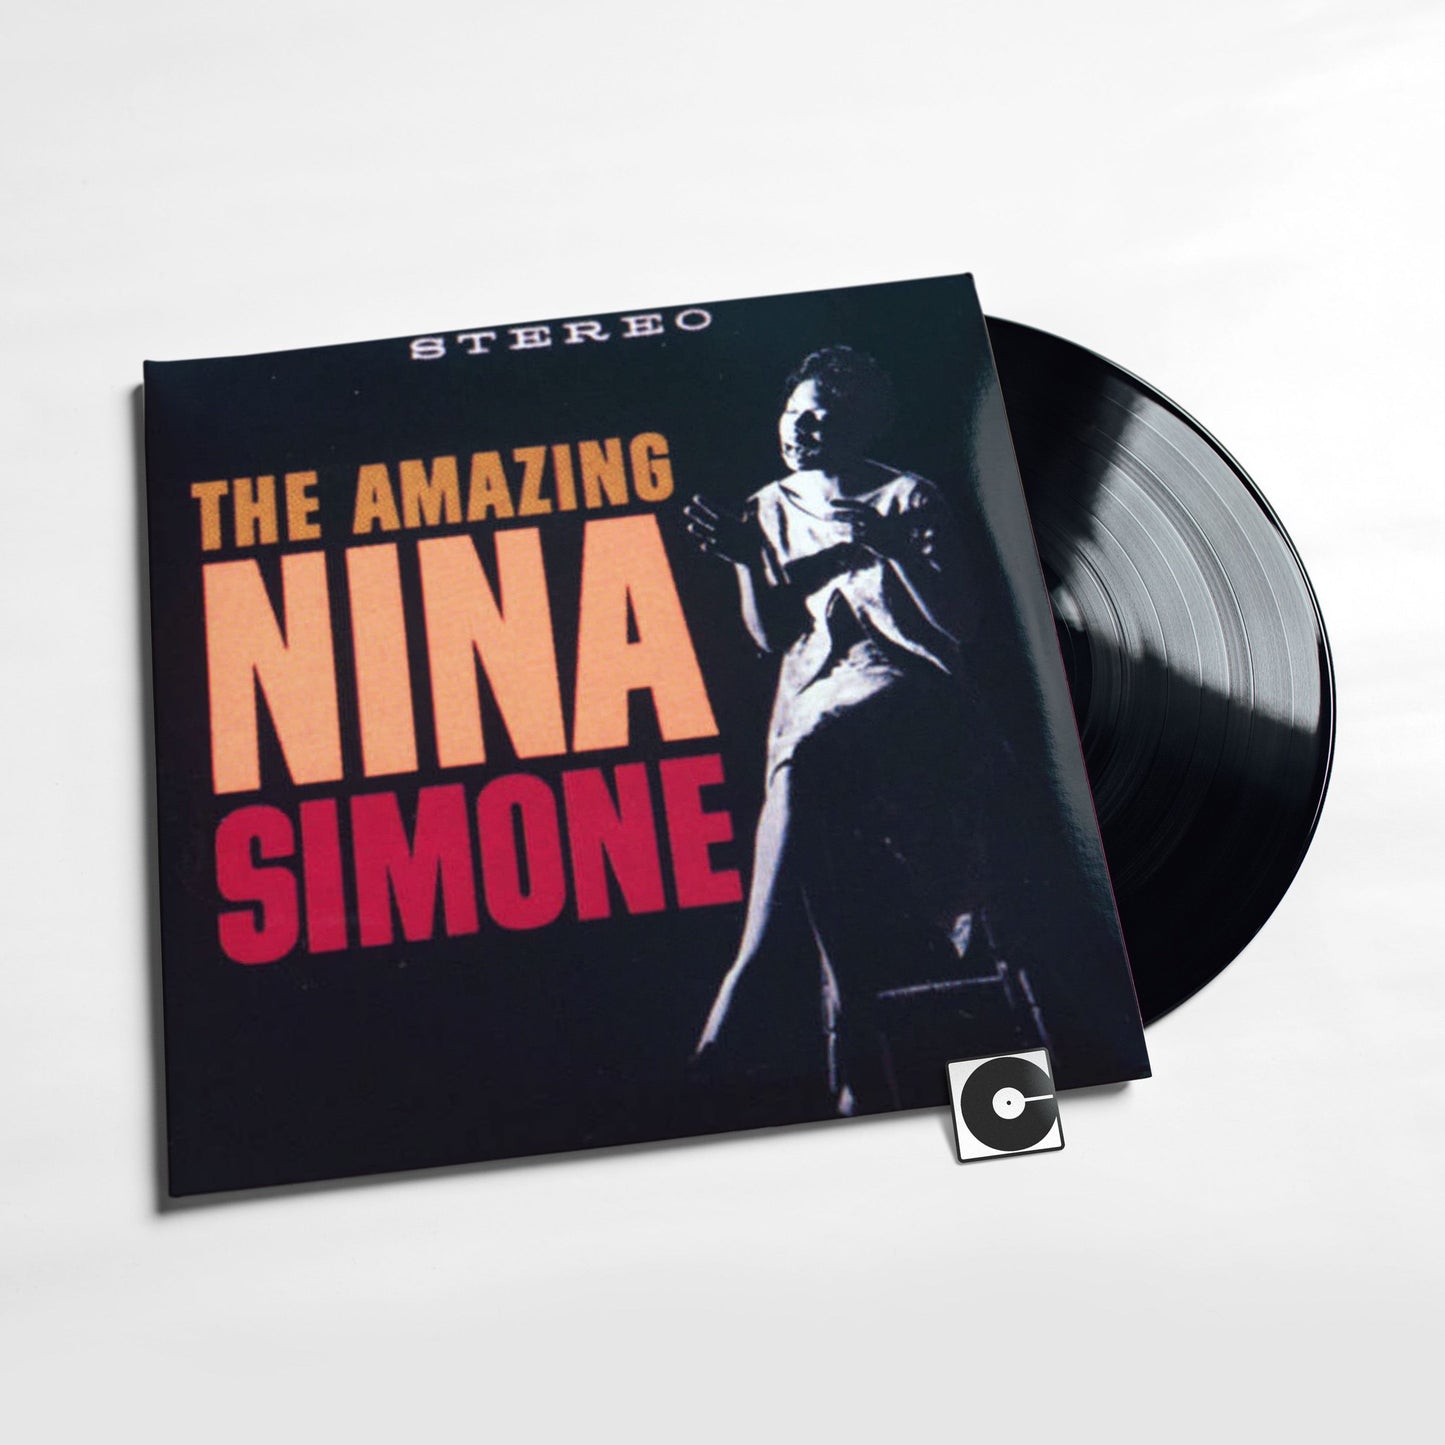 Nina Simone - "The Amazing Nina Simone"